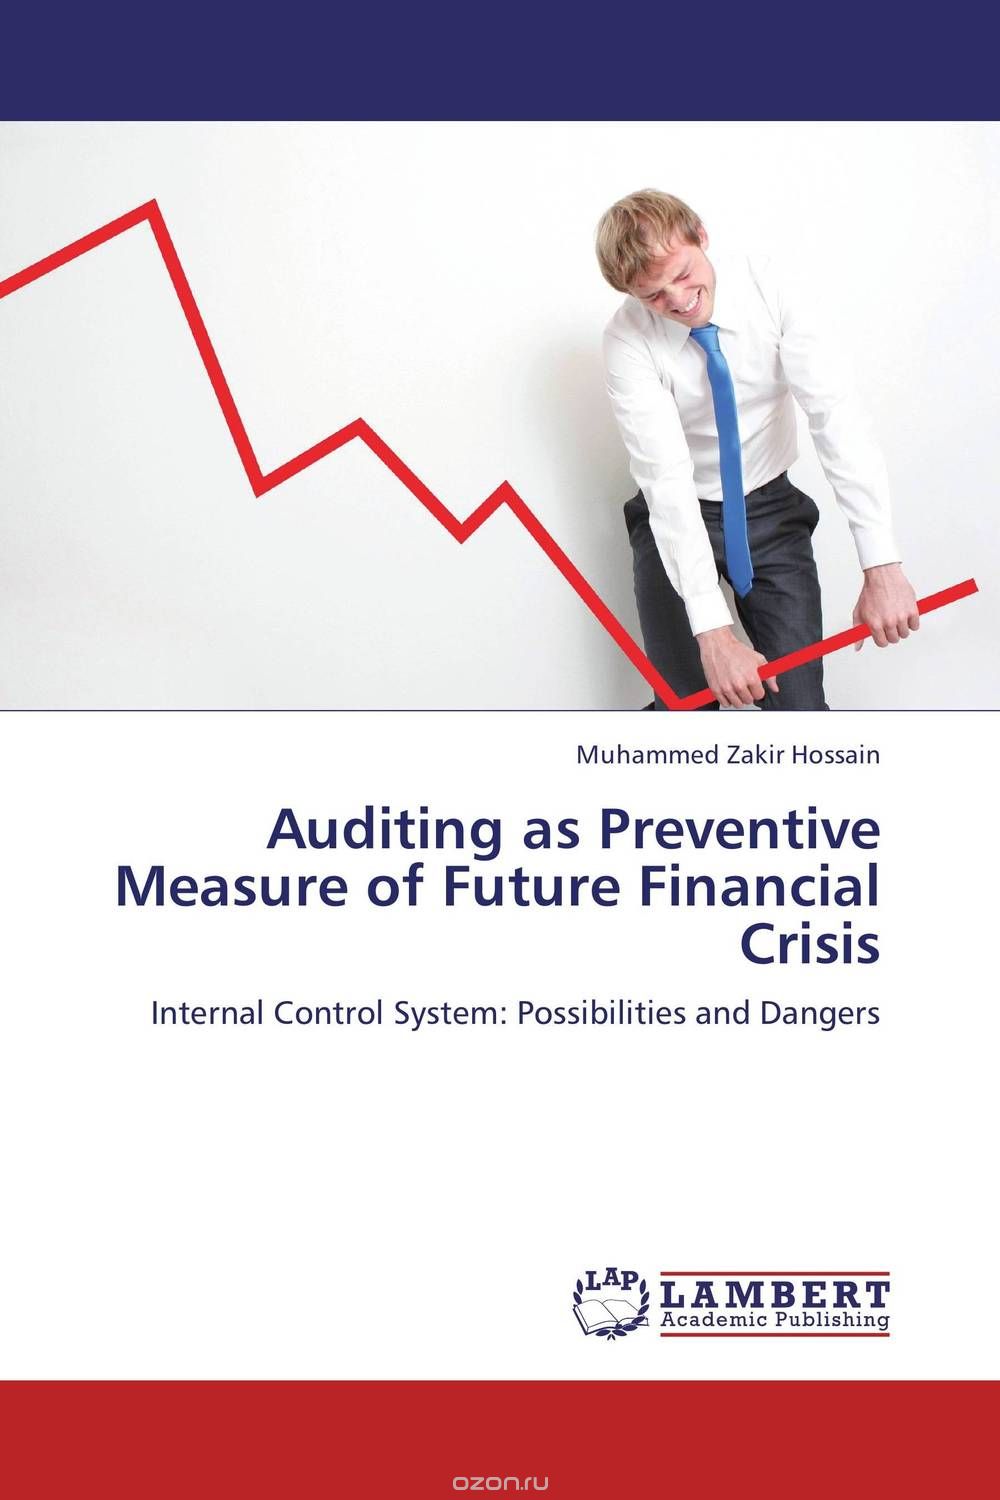 Скачать книгу "Auditing as Preventive Measure of Future Financial Crisis"